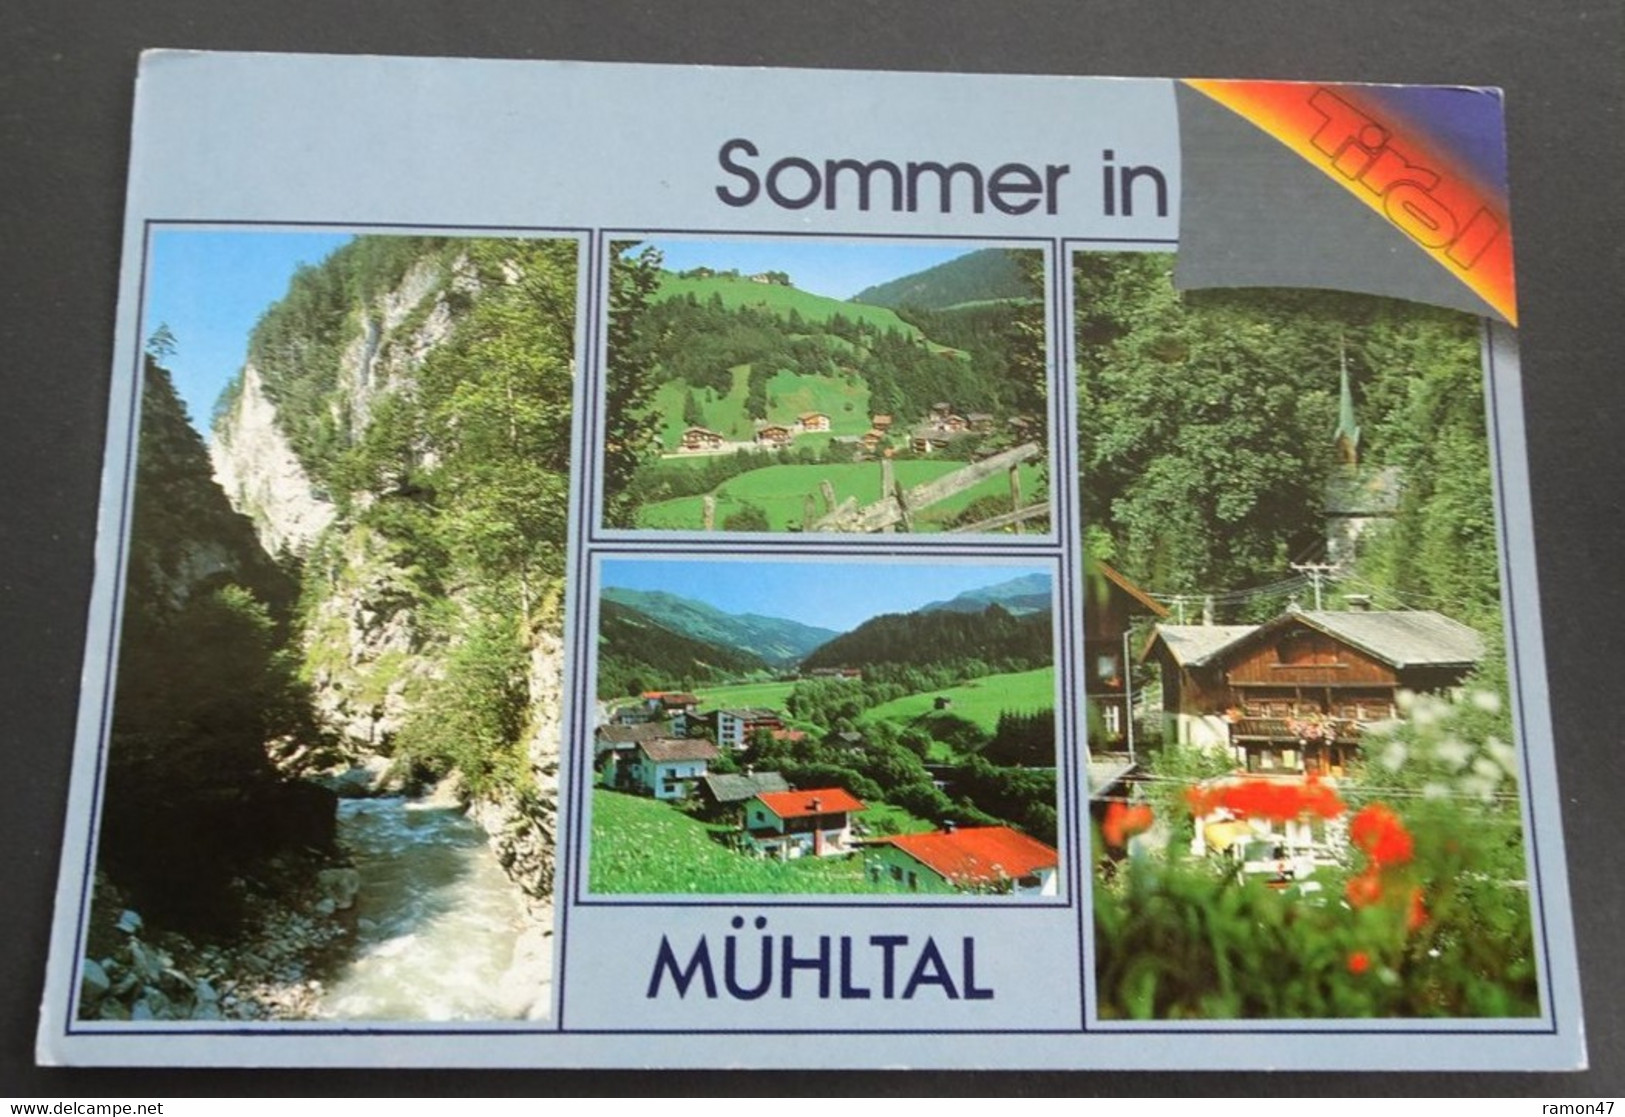 Sommer In Mühltal - Wildschönau - Foto Sandbichler, Oberau - # S 8807 - Wildschönau